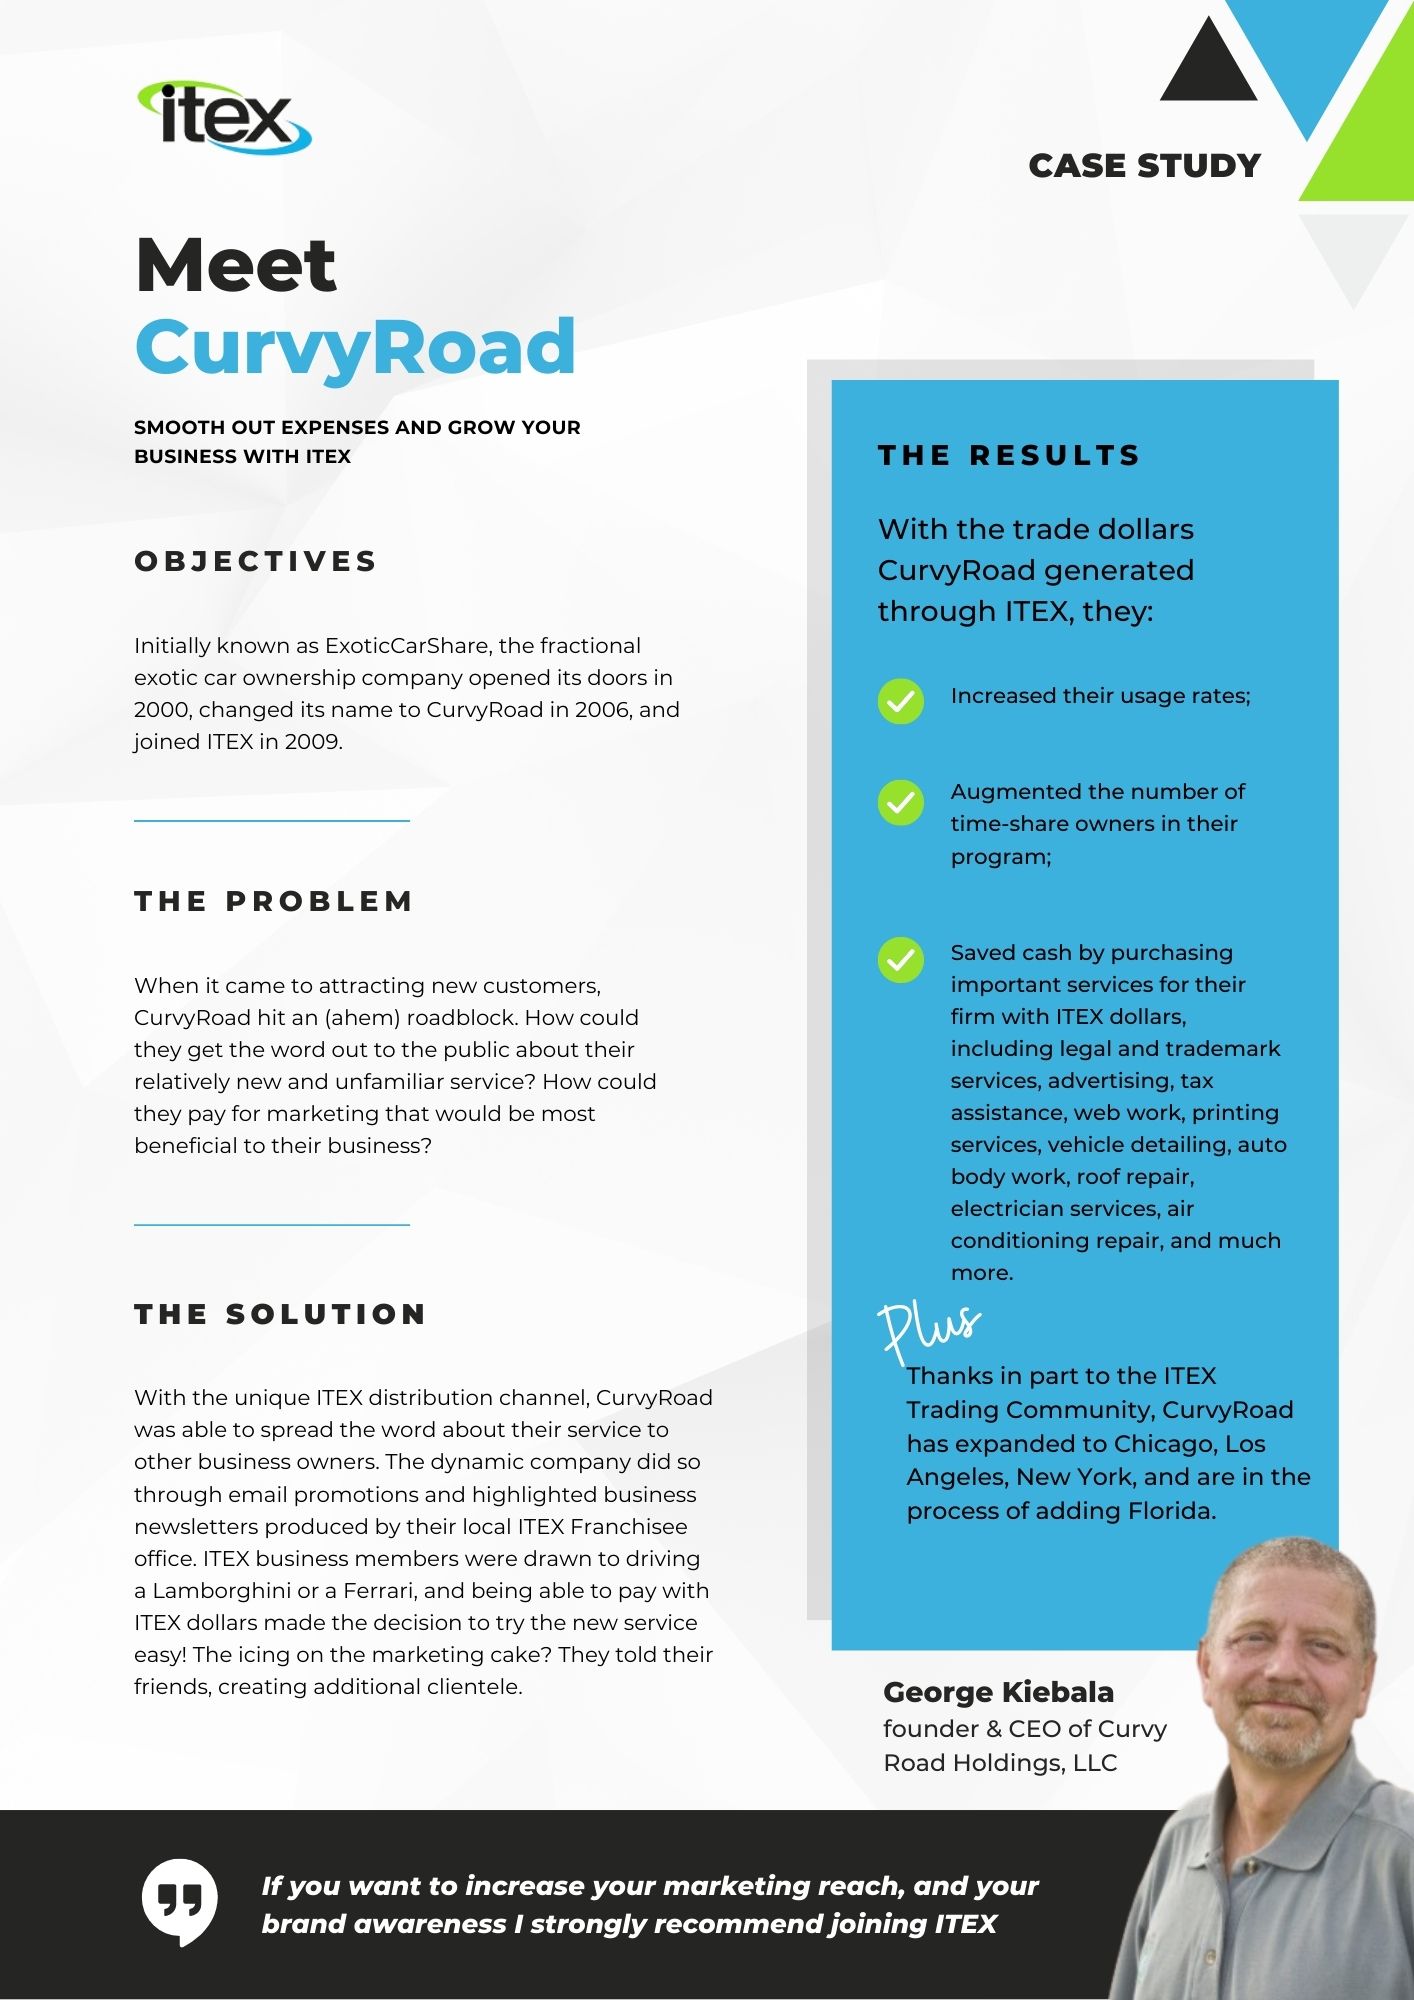 Curvy Road Case Study Image